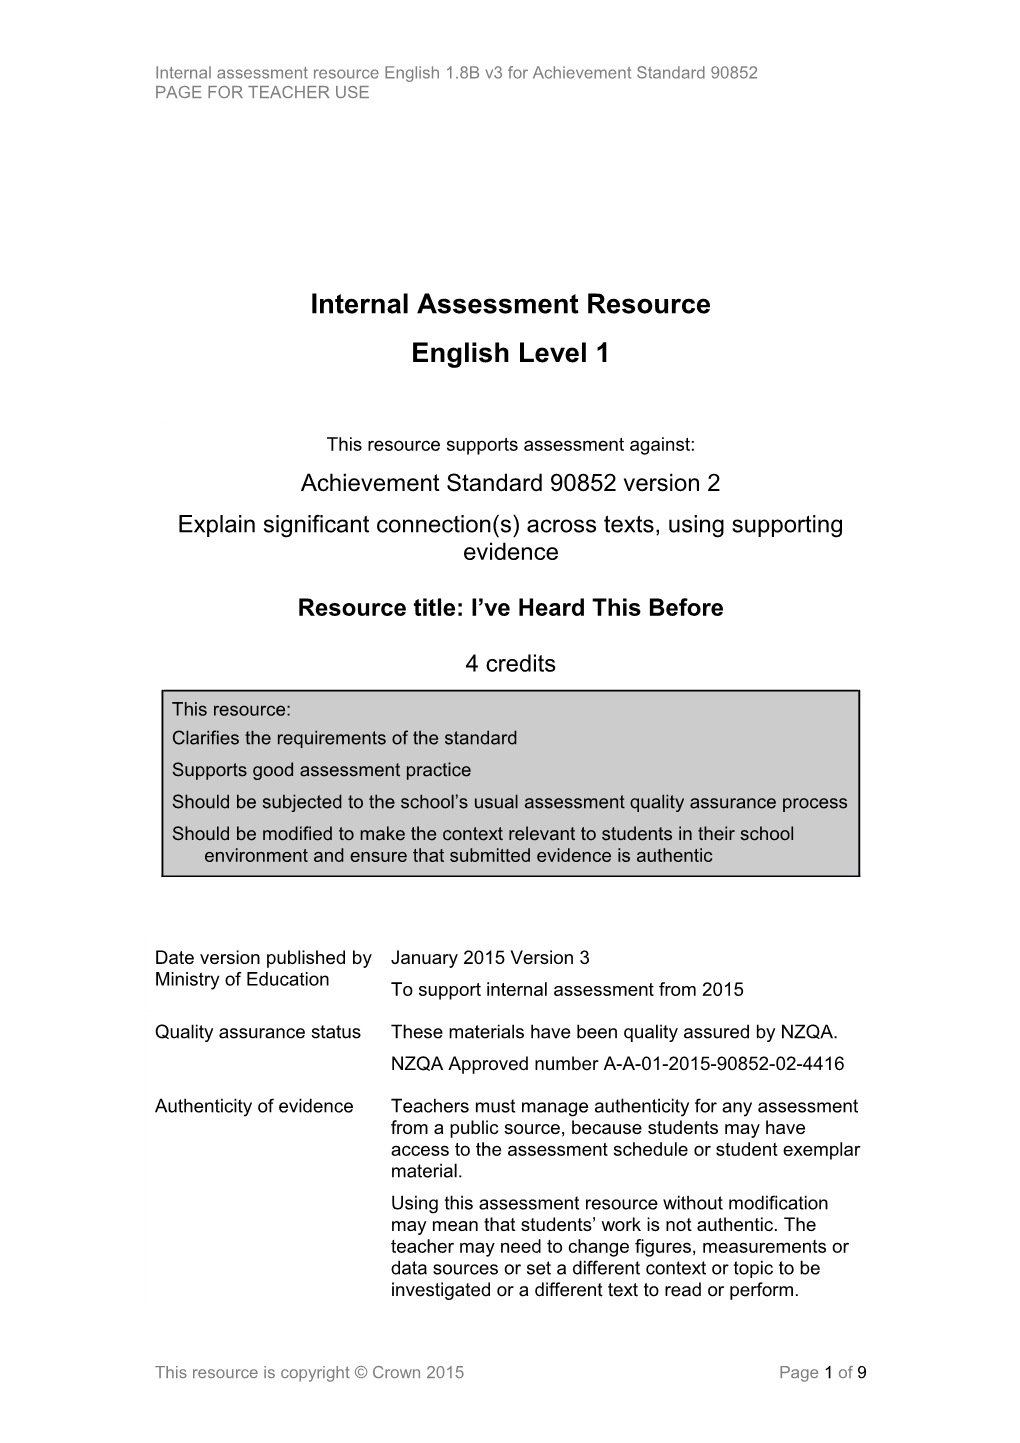 Level 1 English Internal Assessment Resource s1